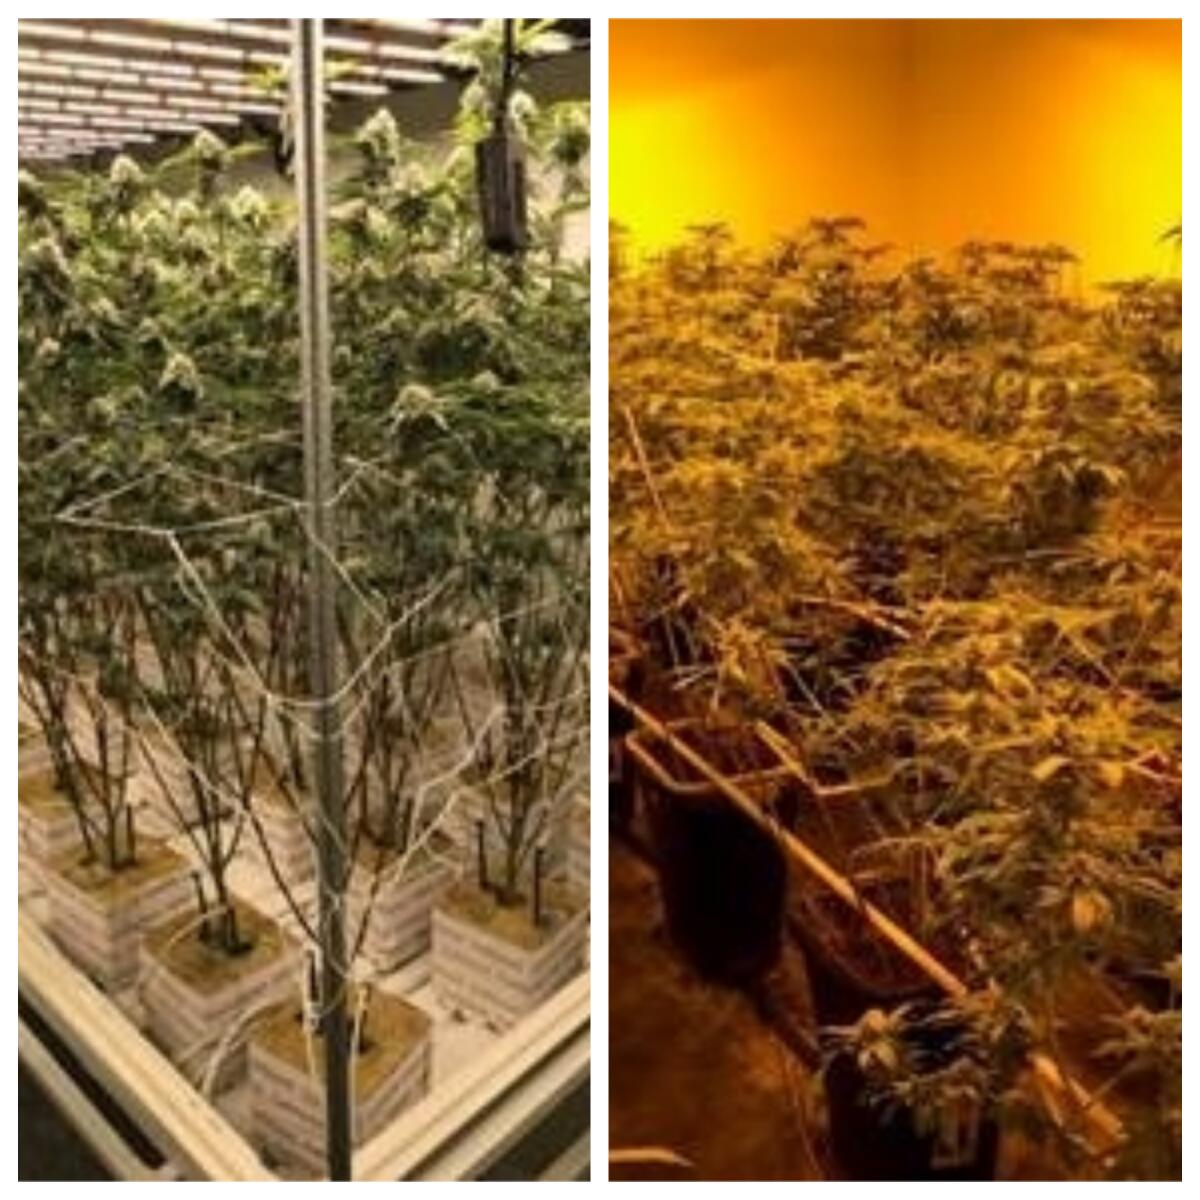 Marijuana plants being grown